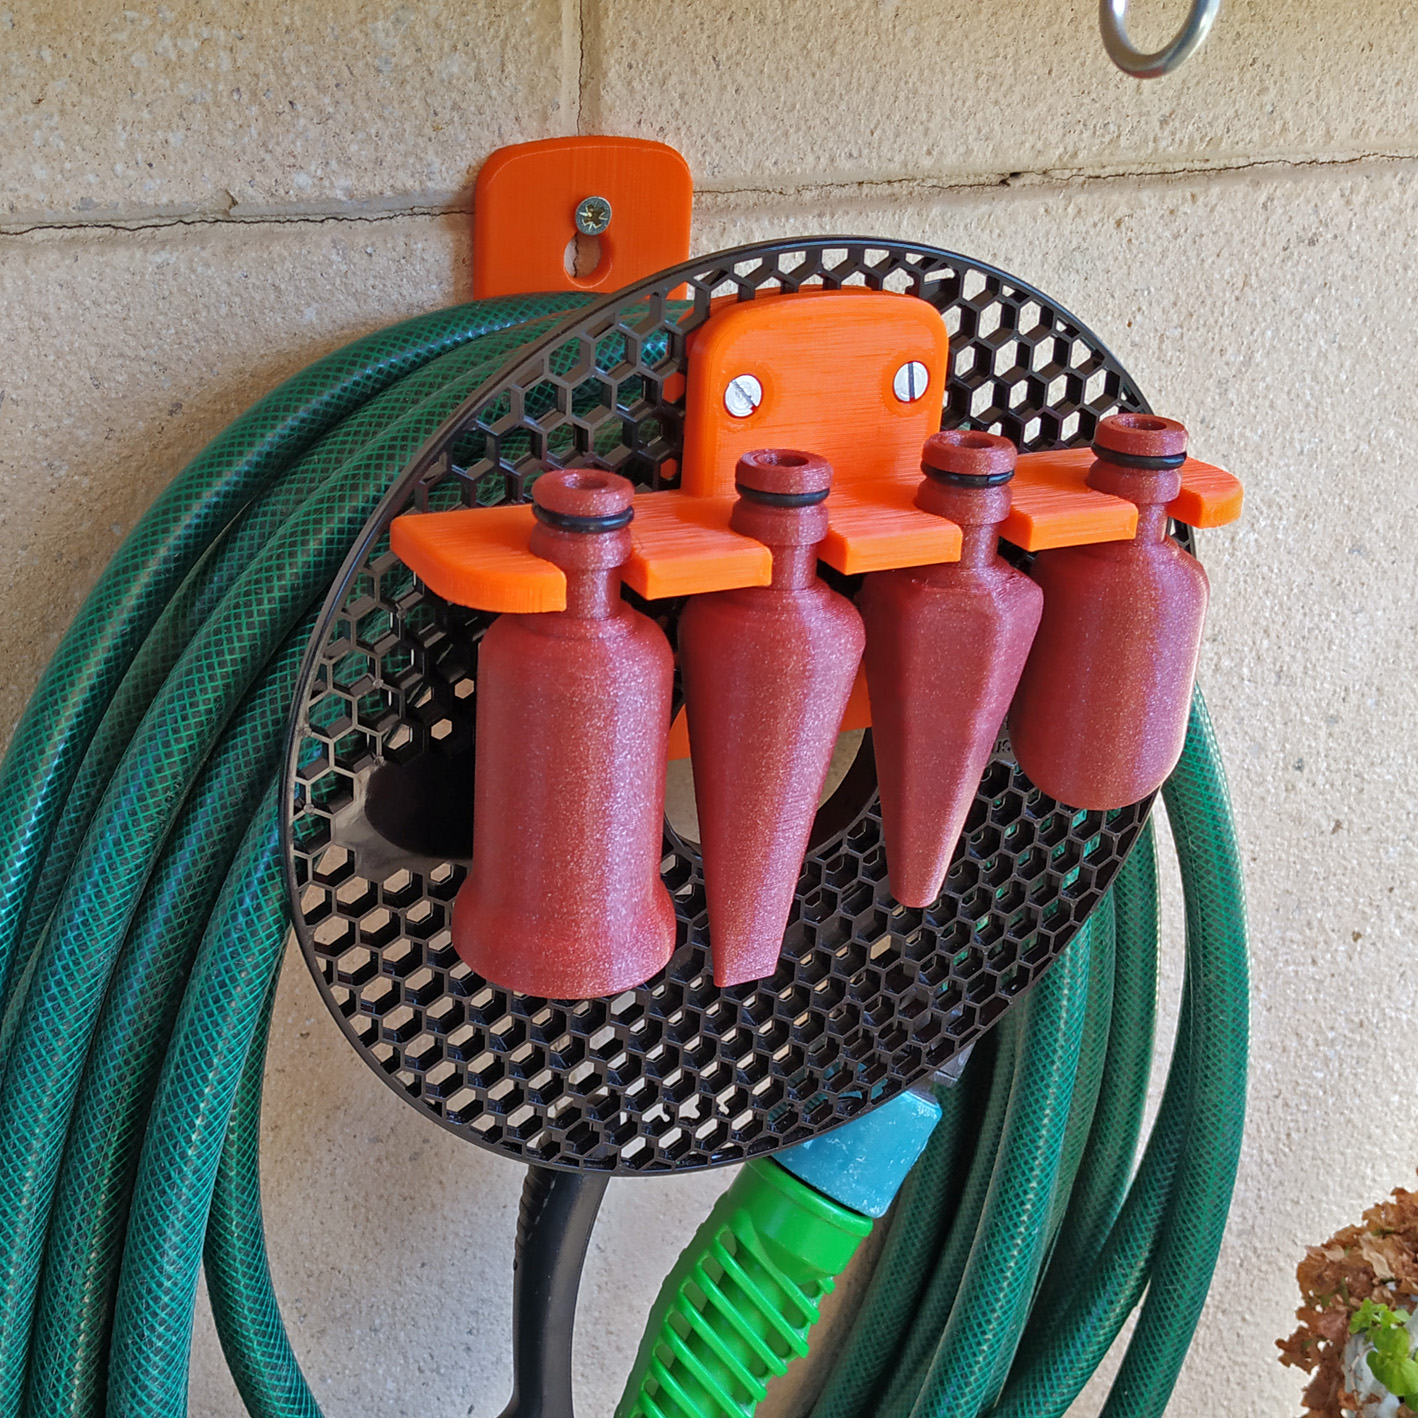 Prusament water hose spool